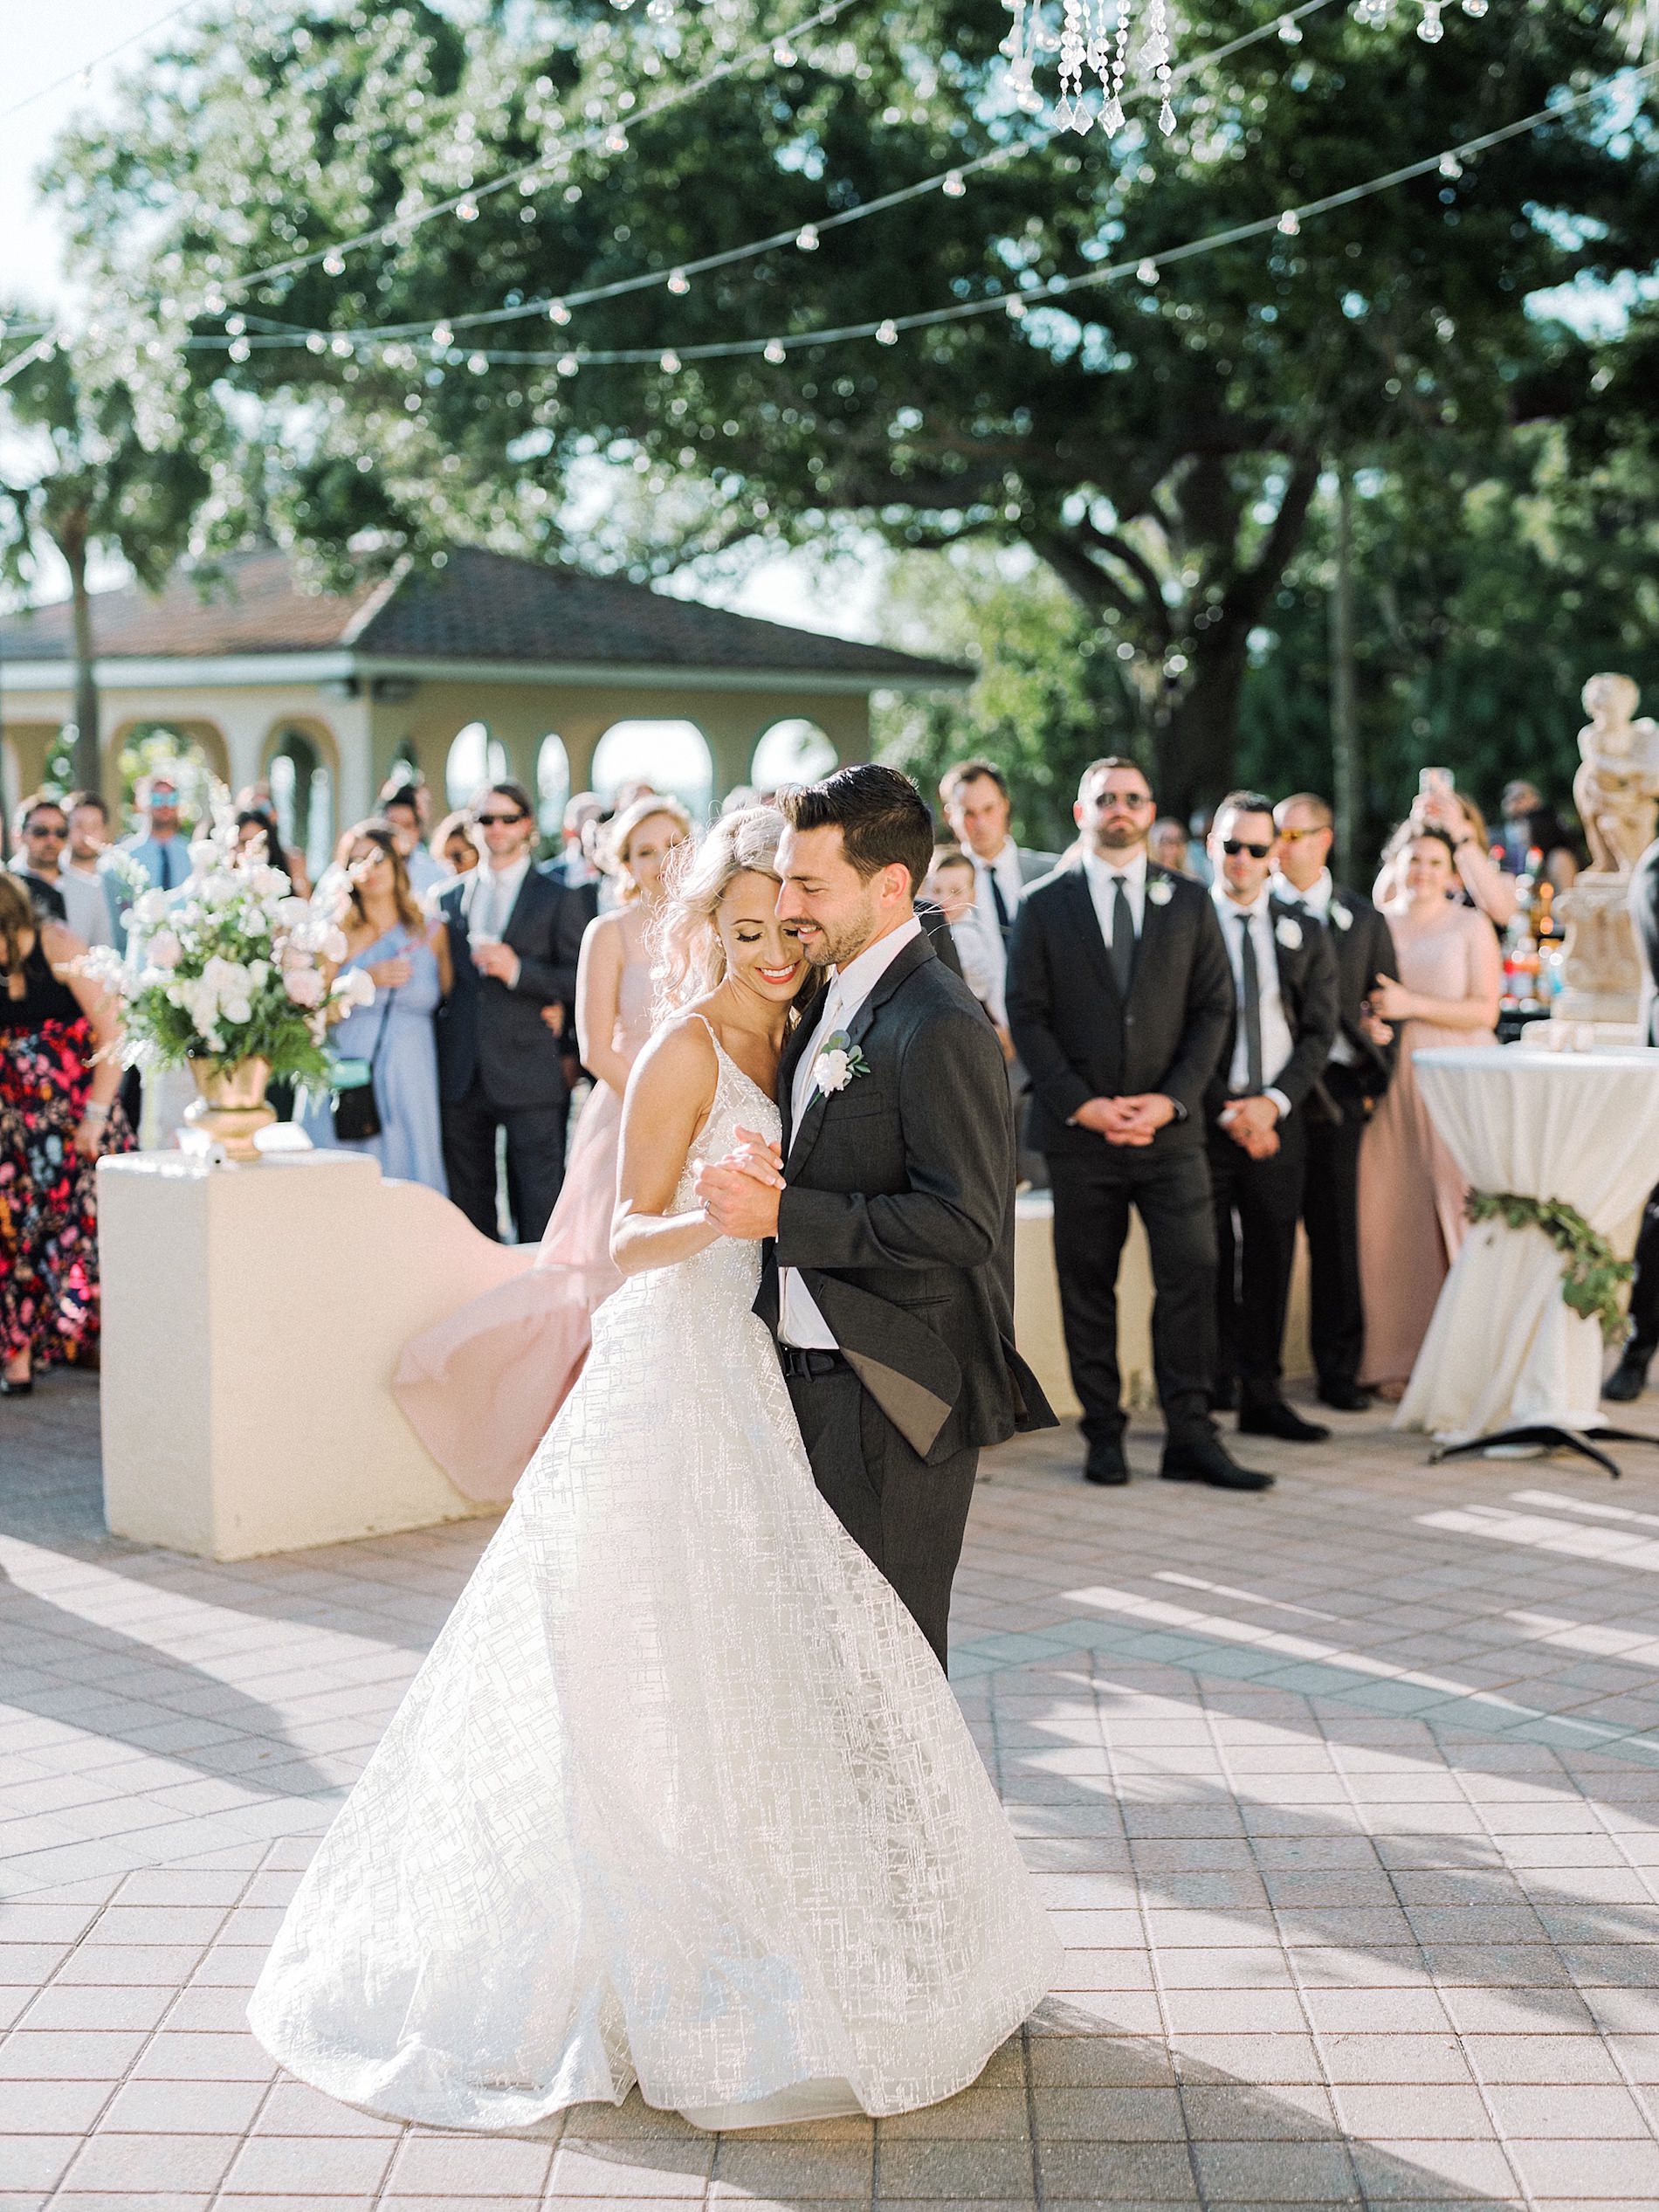 Romantic Bride and Groom Courtyard First Dance Wedding Reception Portrait | Sarasota Wedding Venue Powel Crosley Estate